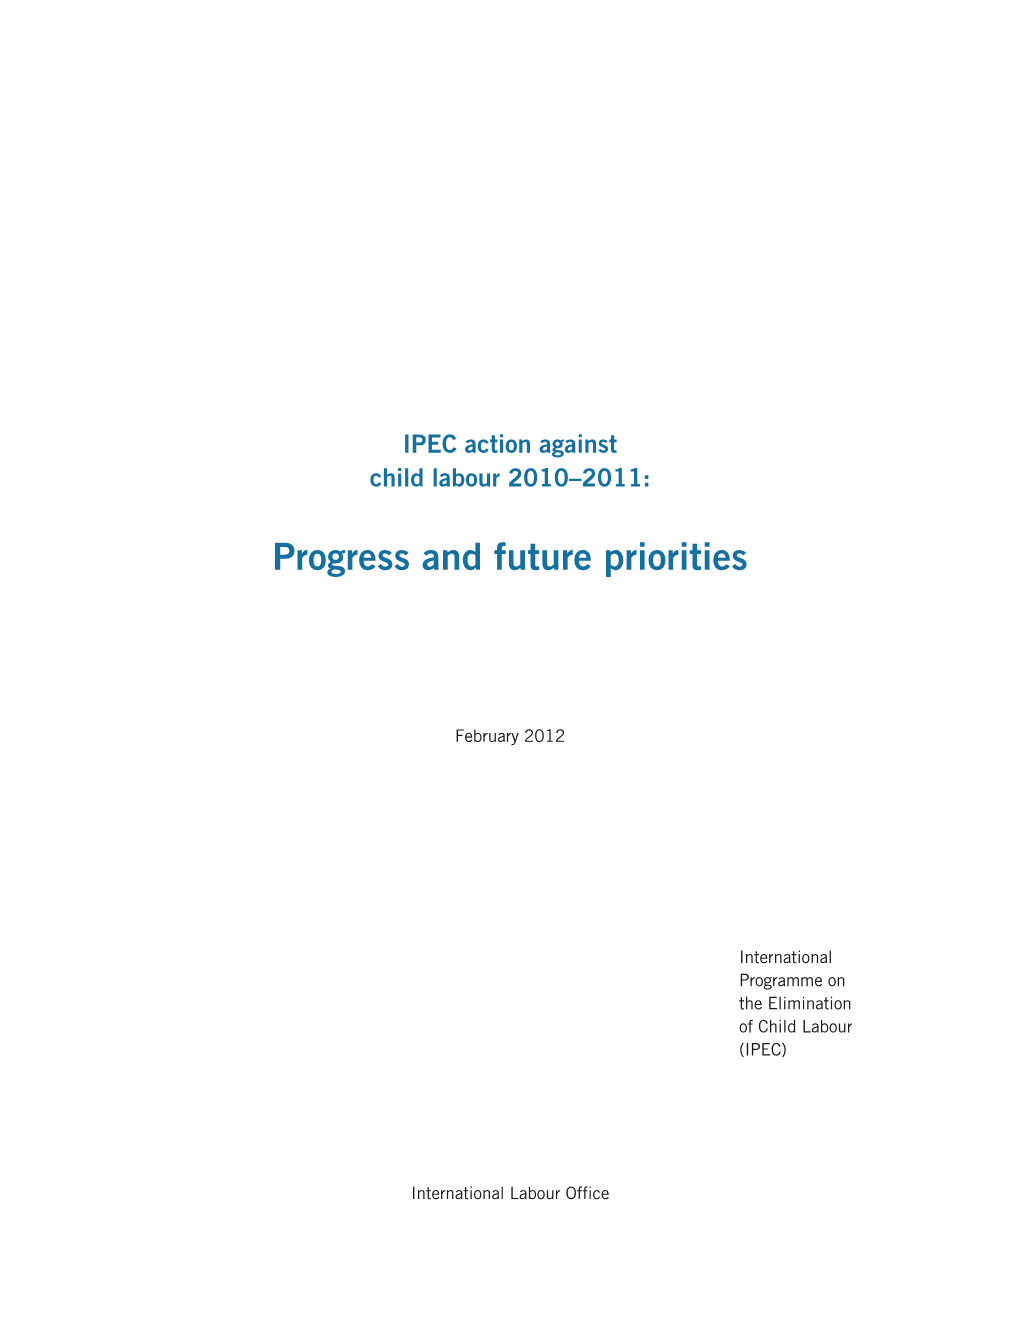 Progress and Future Priorities